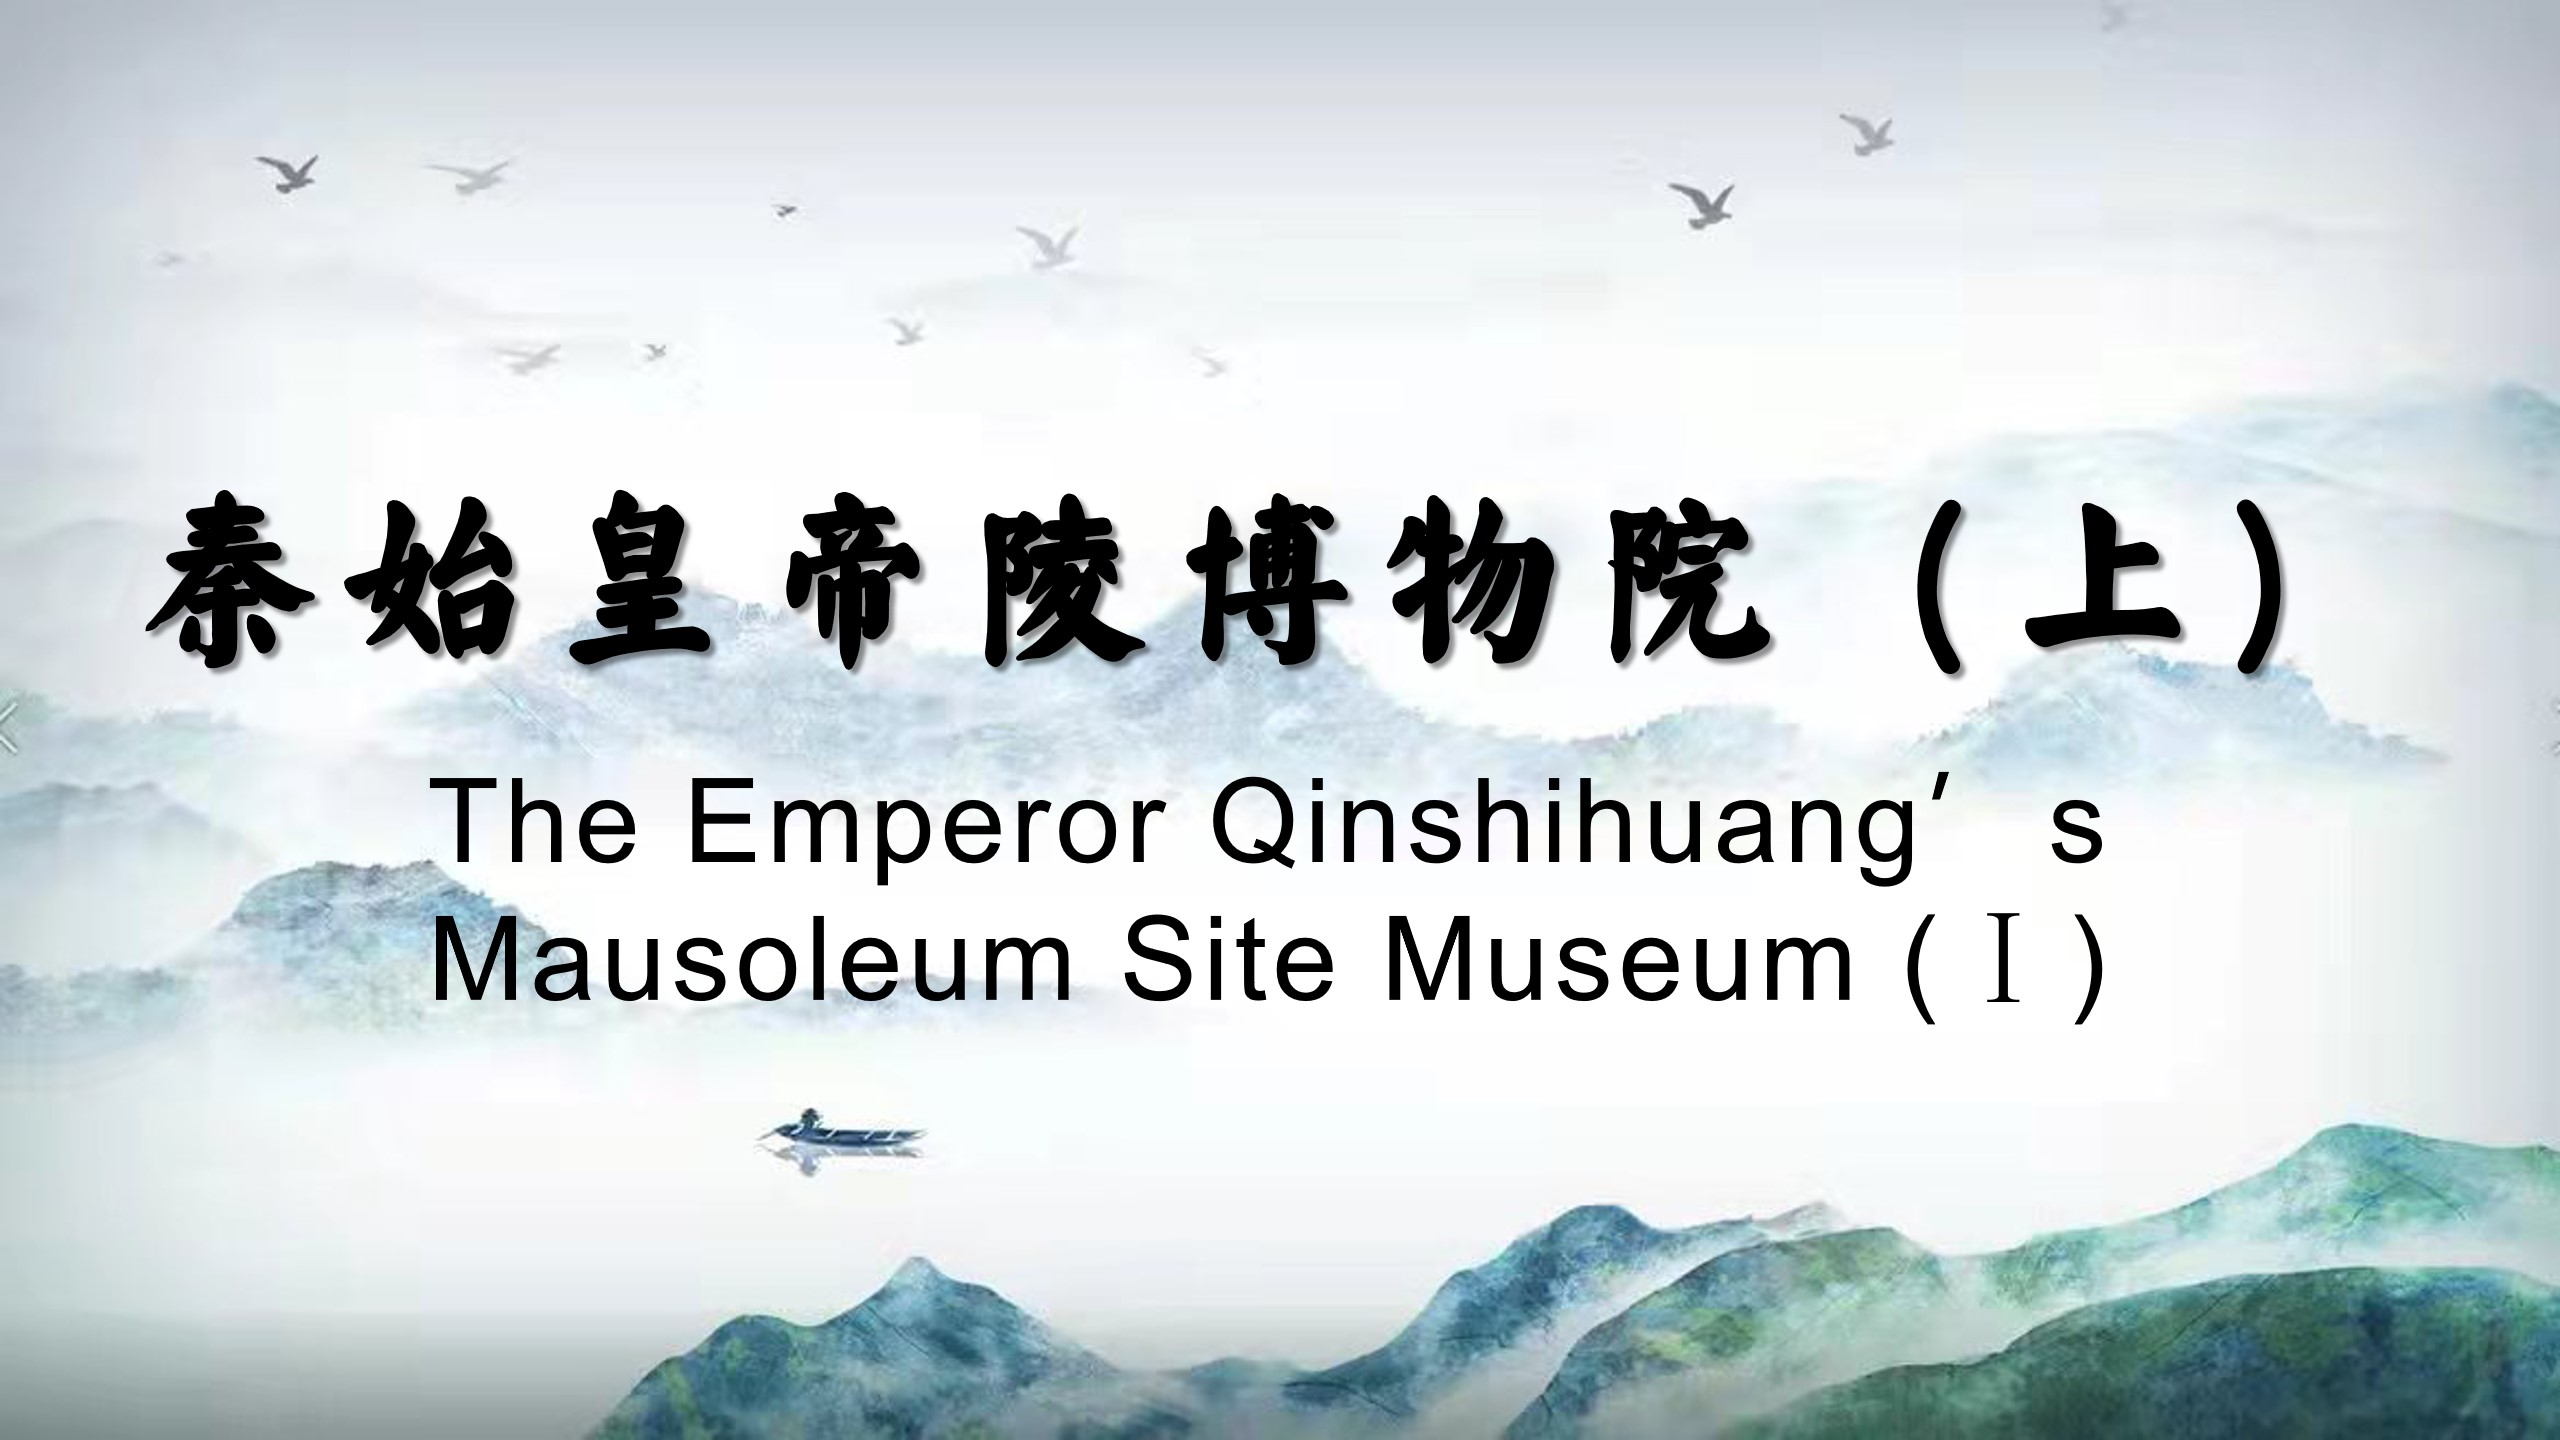 The Emperor Qinshihuang’s Mausoleum Site Museum (Ⅰ)